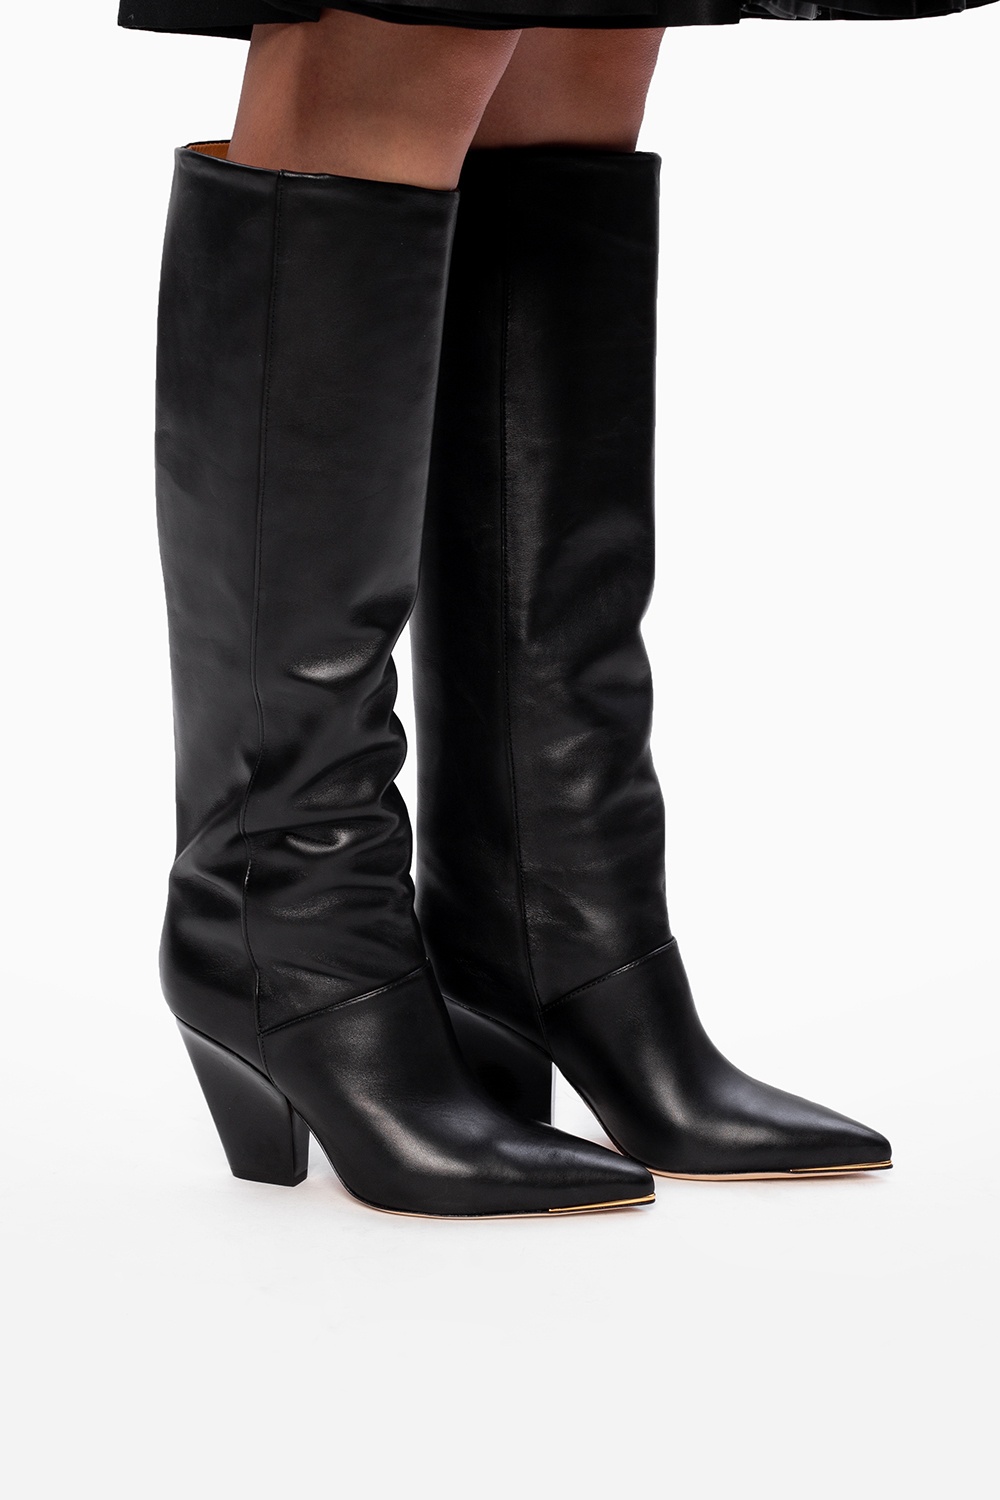 Black 'Lila' heeled boots Tory Burch - Vitkac TW